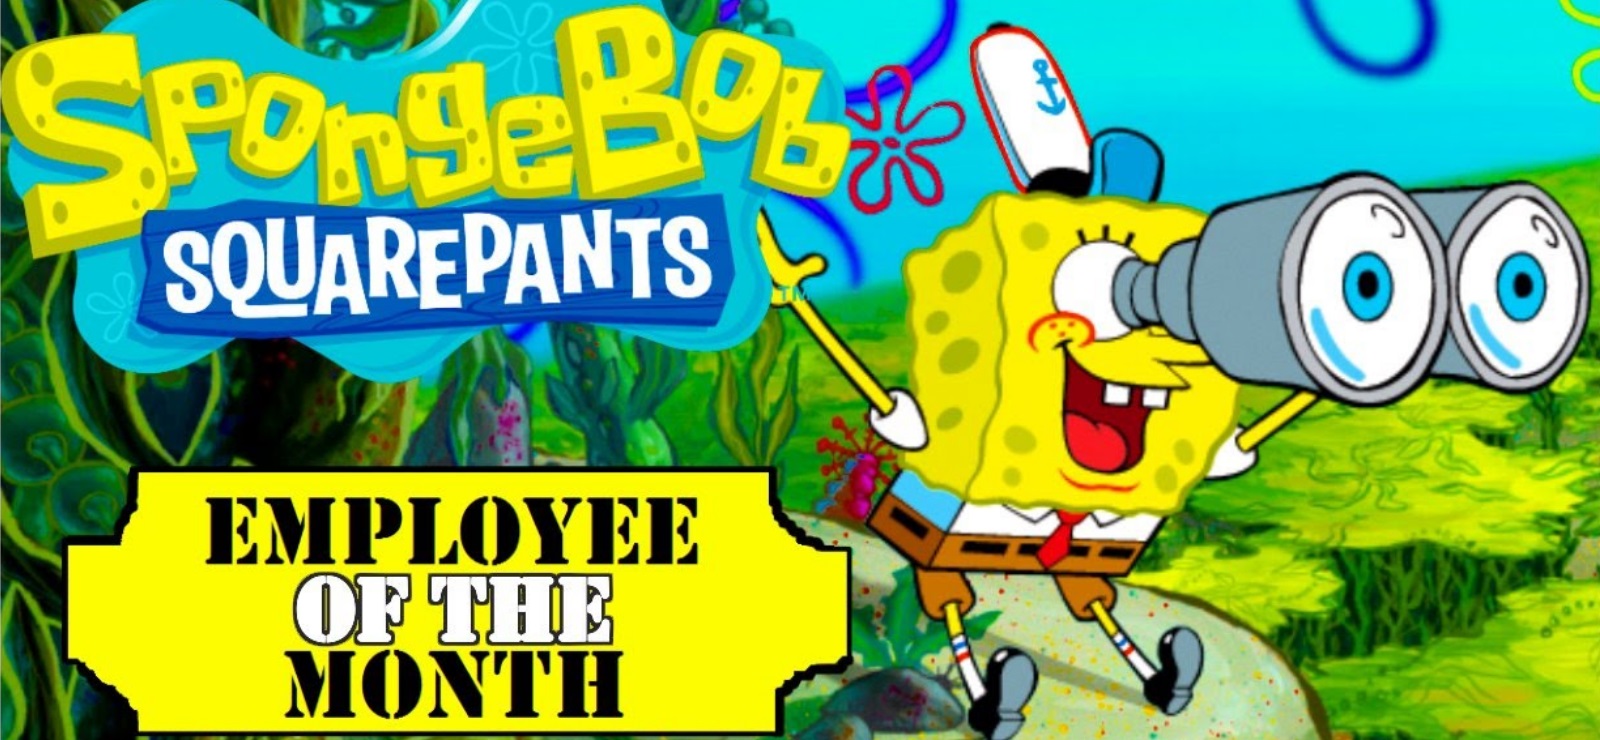 spongebob squarepants employee of the month download mac